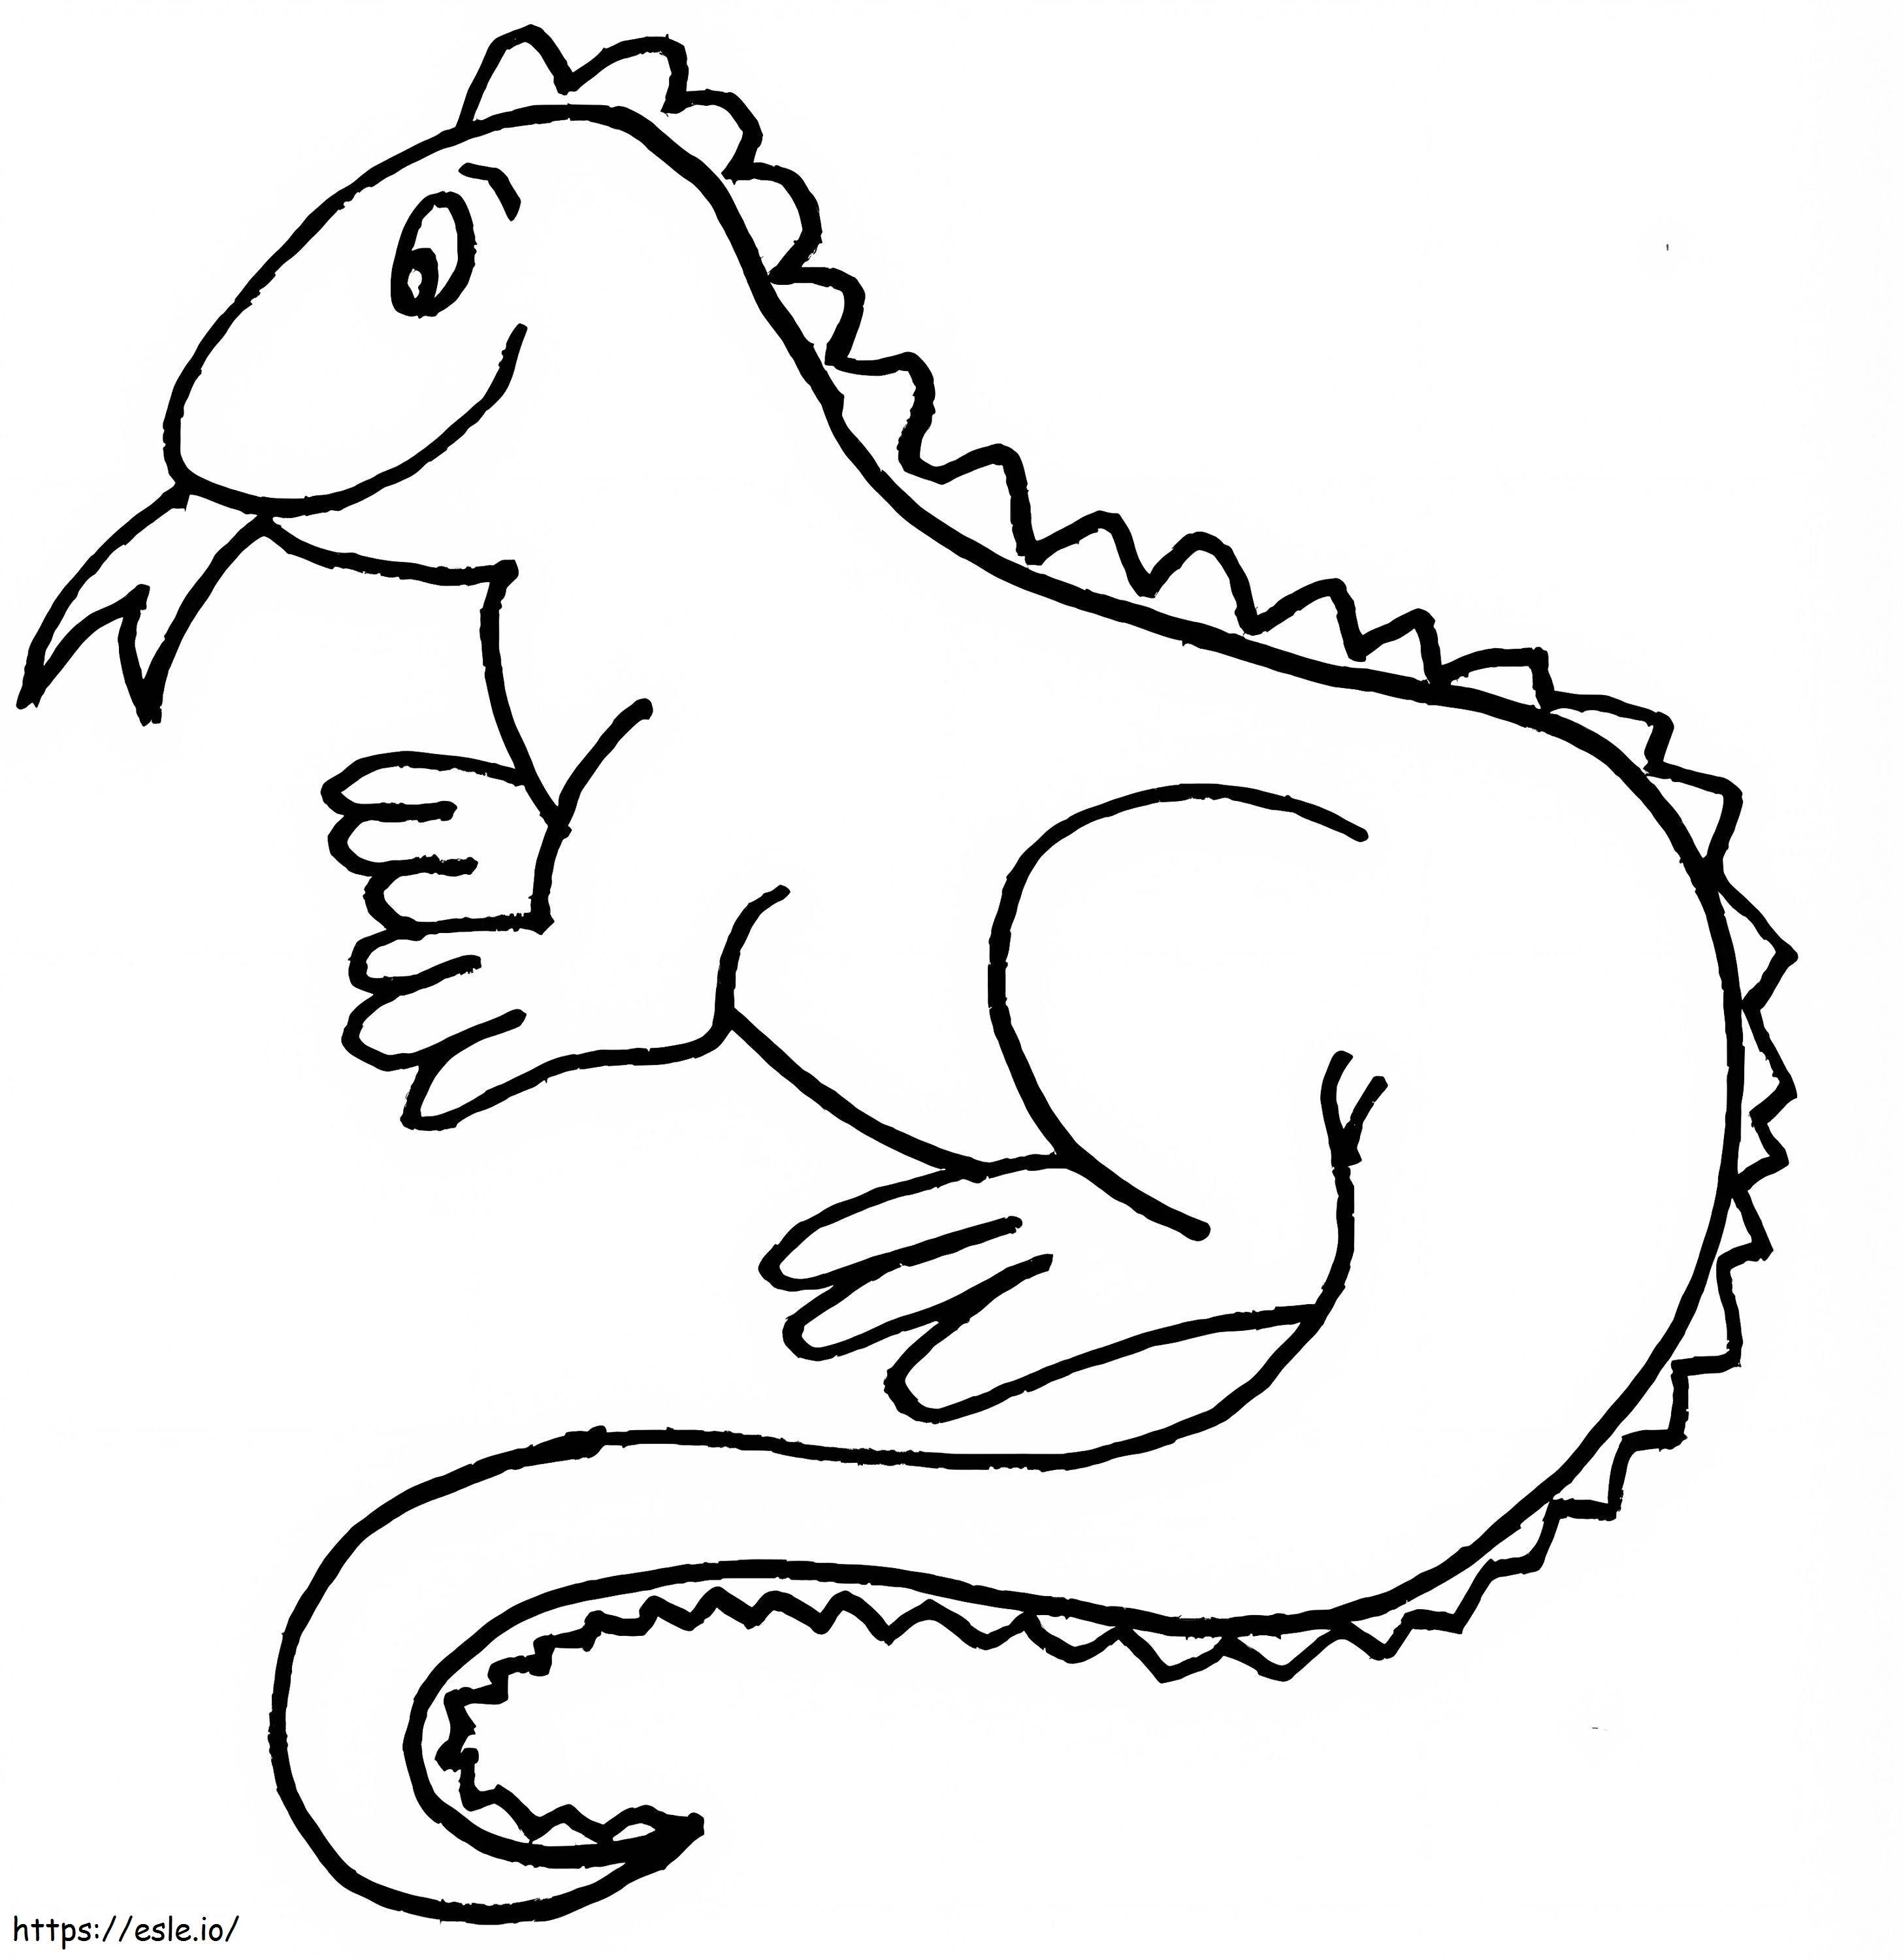 Iguana fácil para colorir